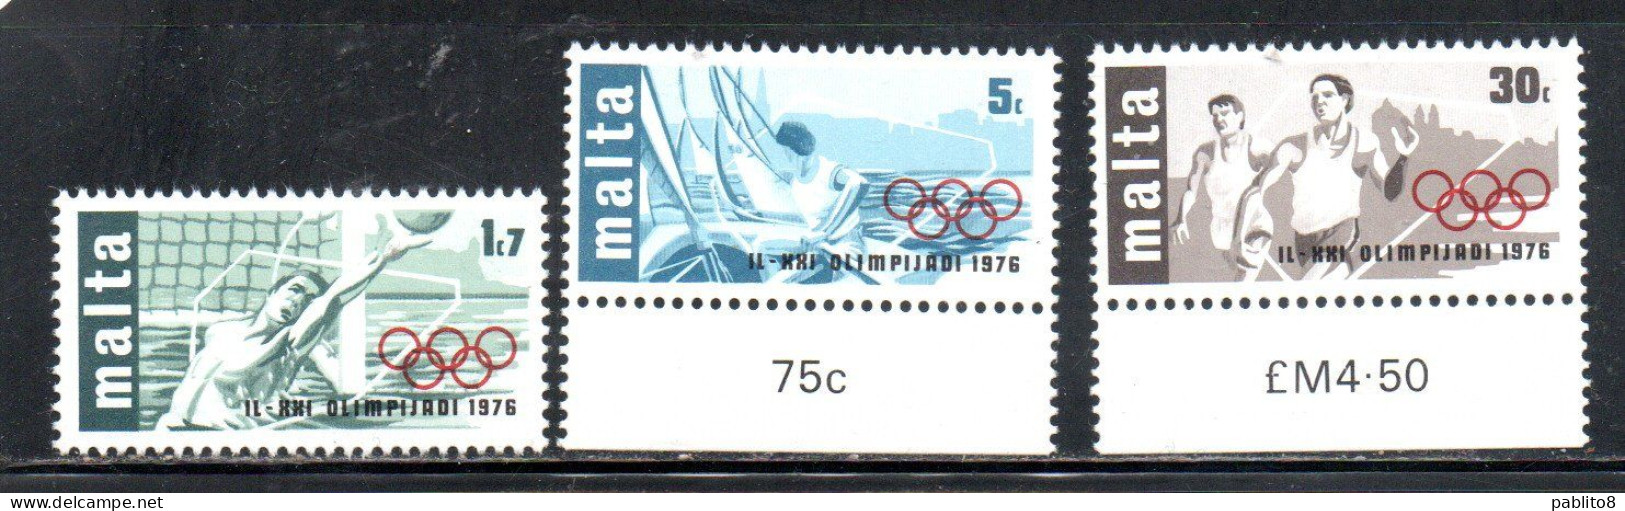 MALTA 1976 OLYMPIC GAMES MONTREAL CANADA GIOCHI OLIMPICI OLIMPIADE COMPLETE SET SERIE COMPLETA MNH - Malta